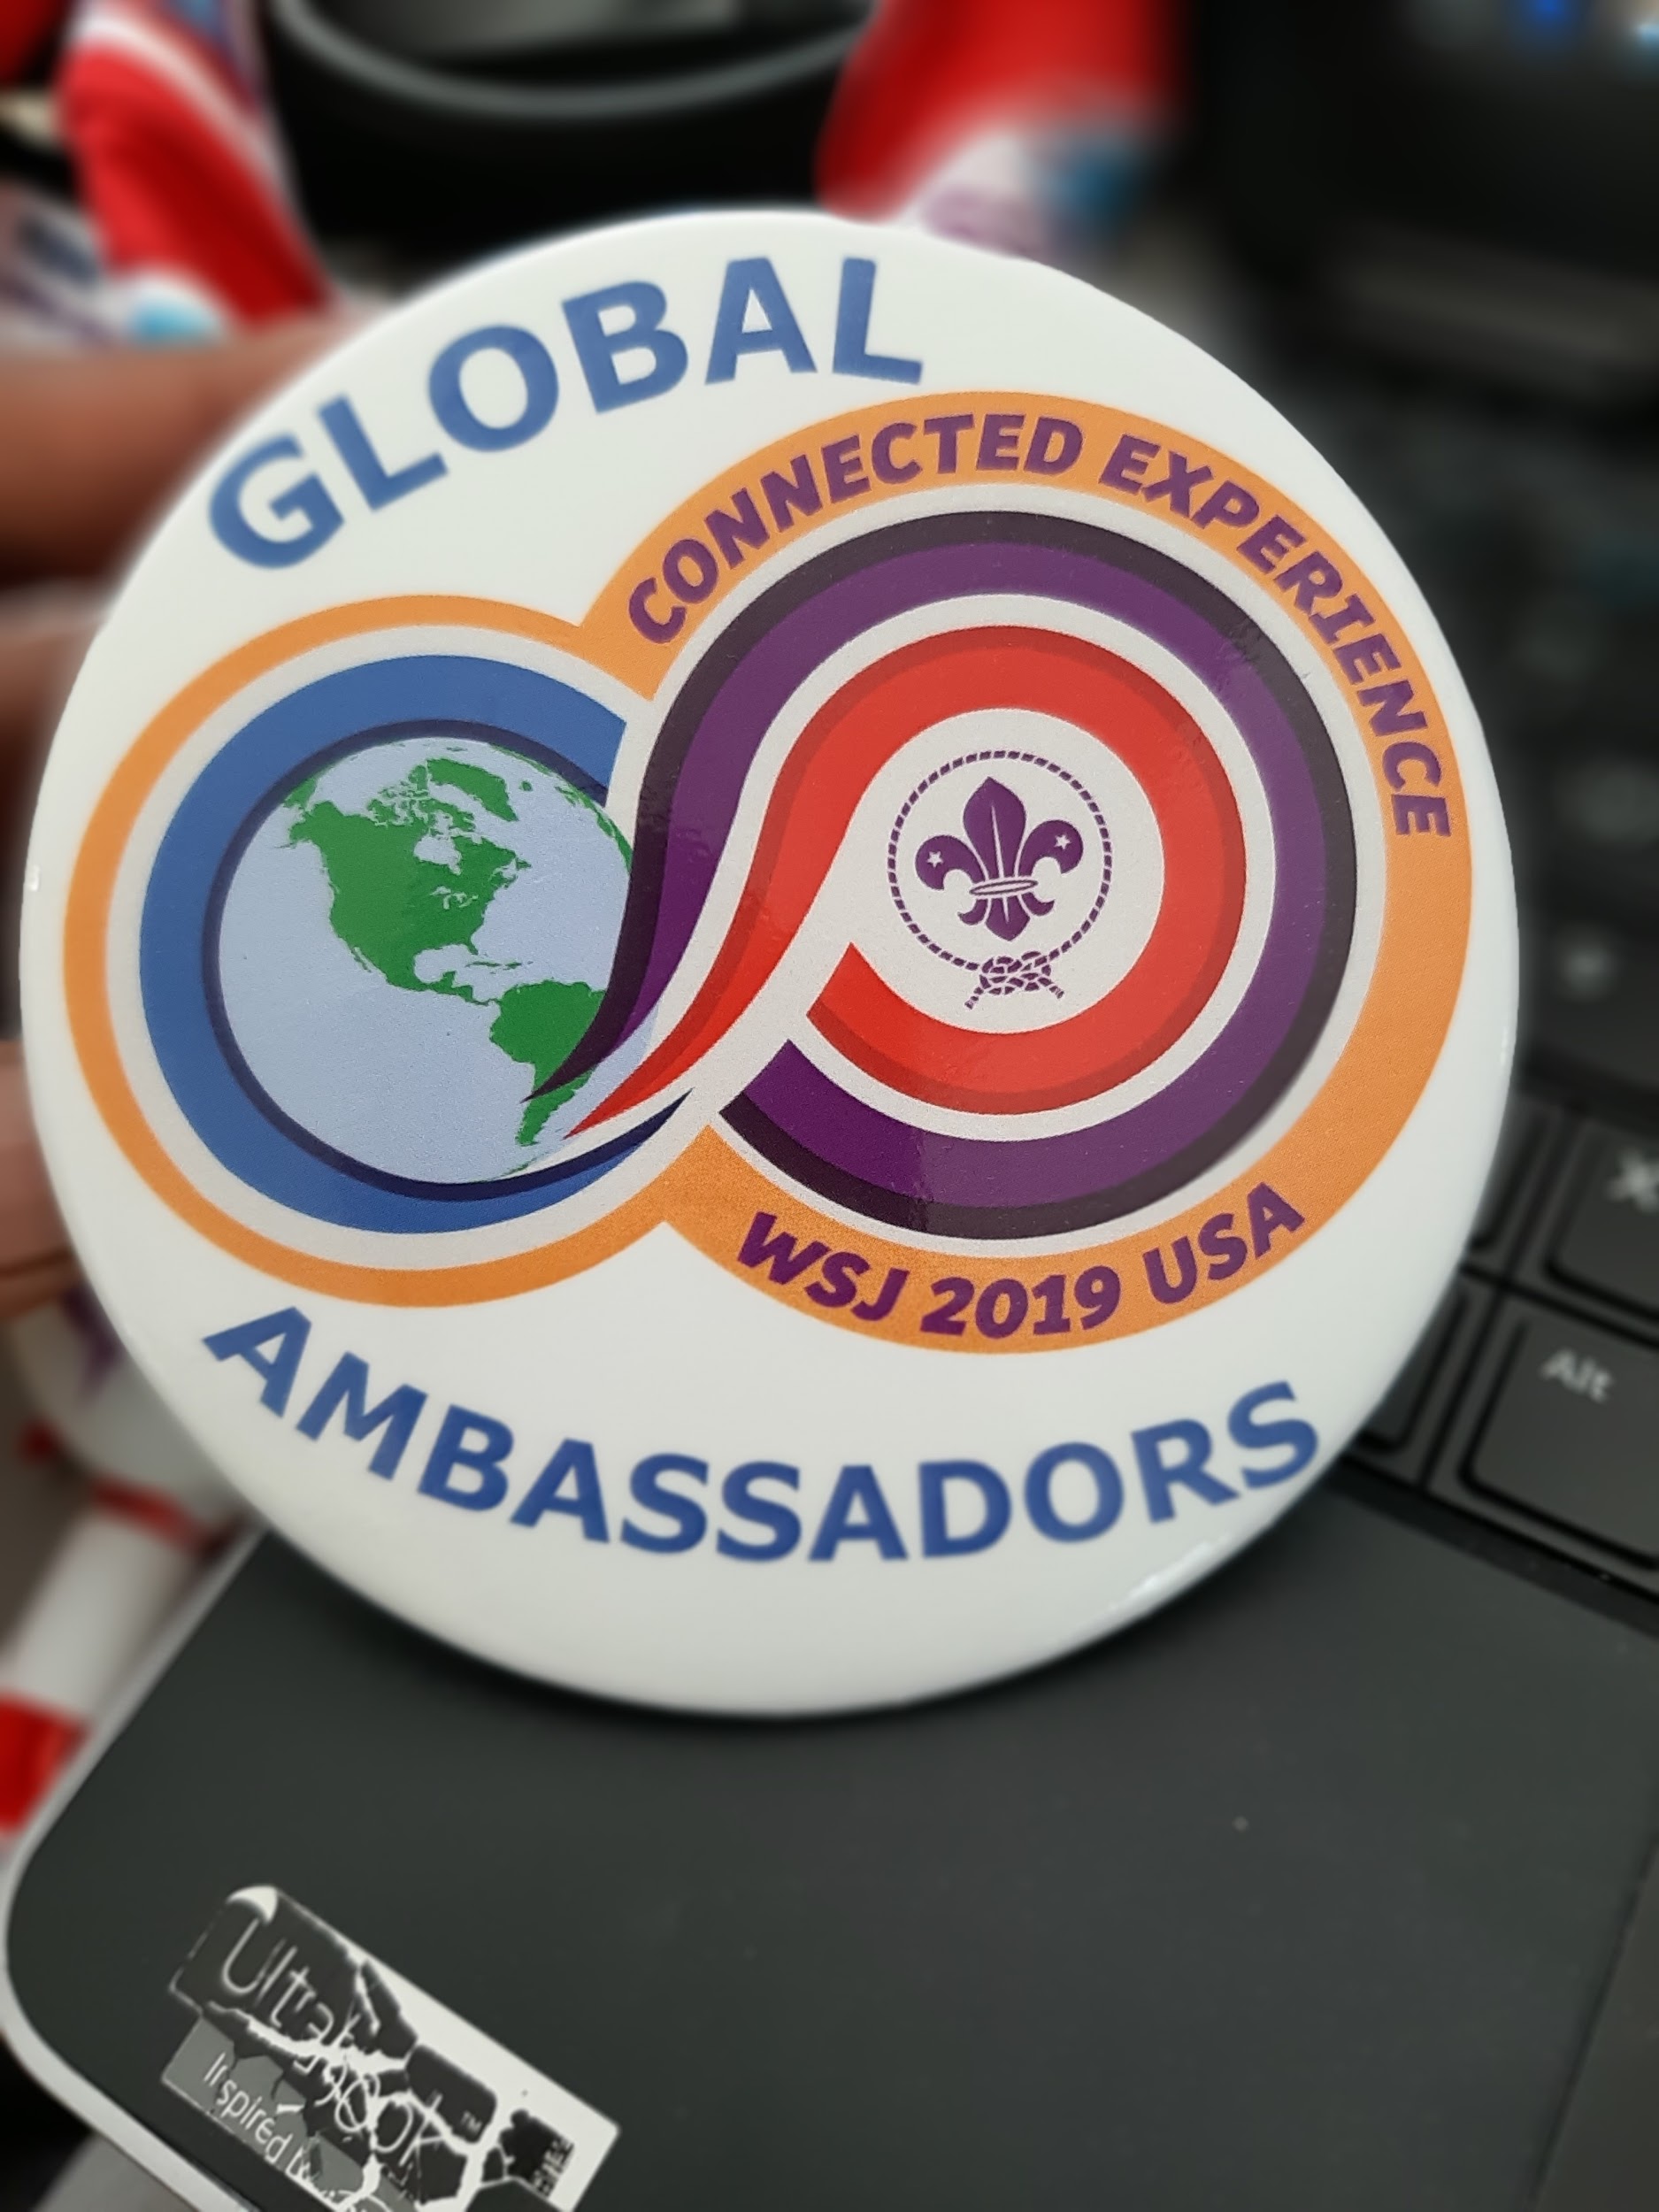 My experience as a global ambassador